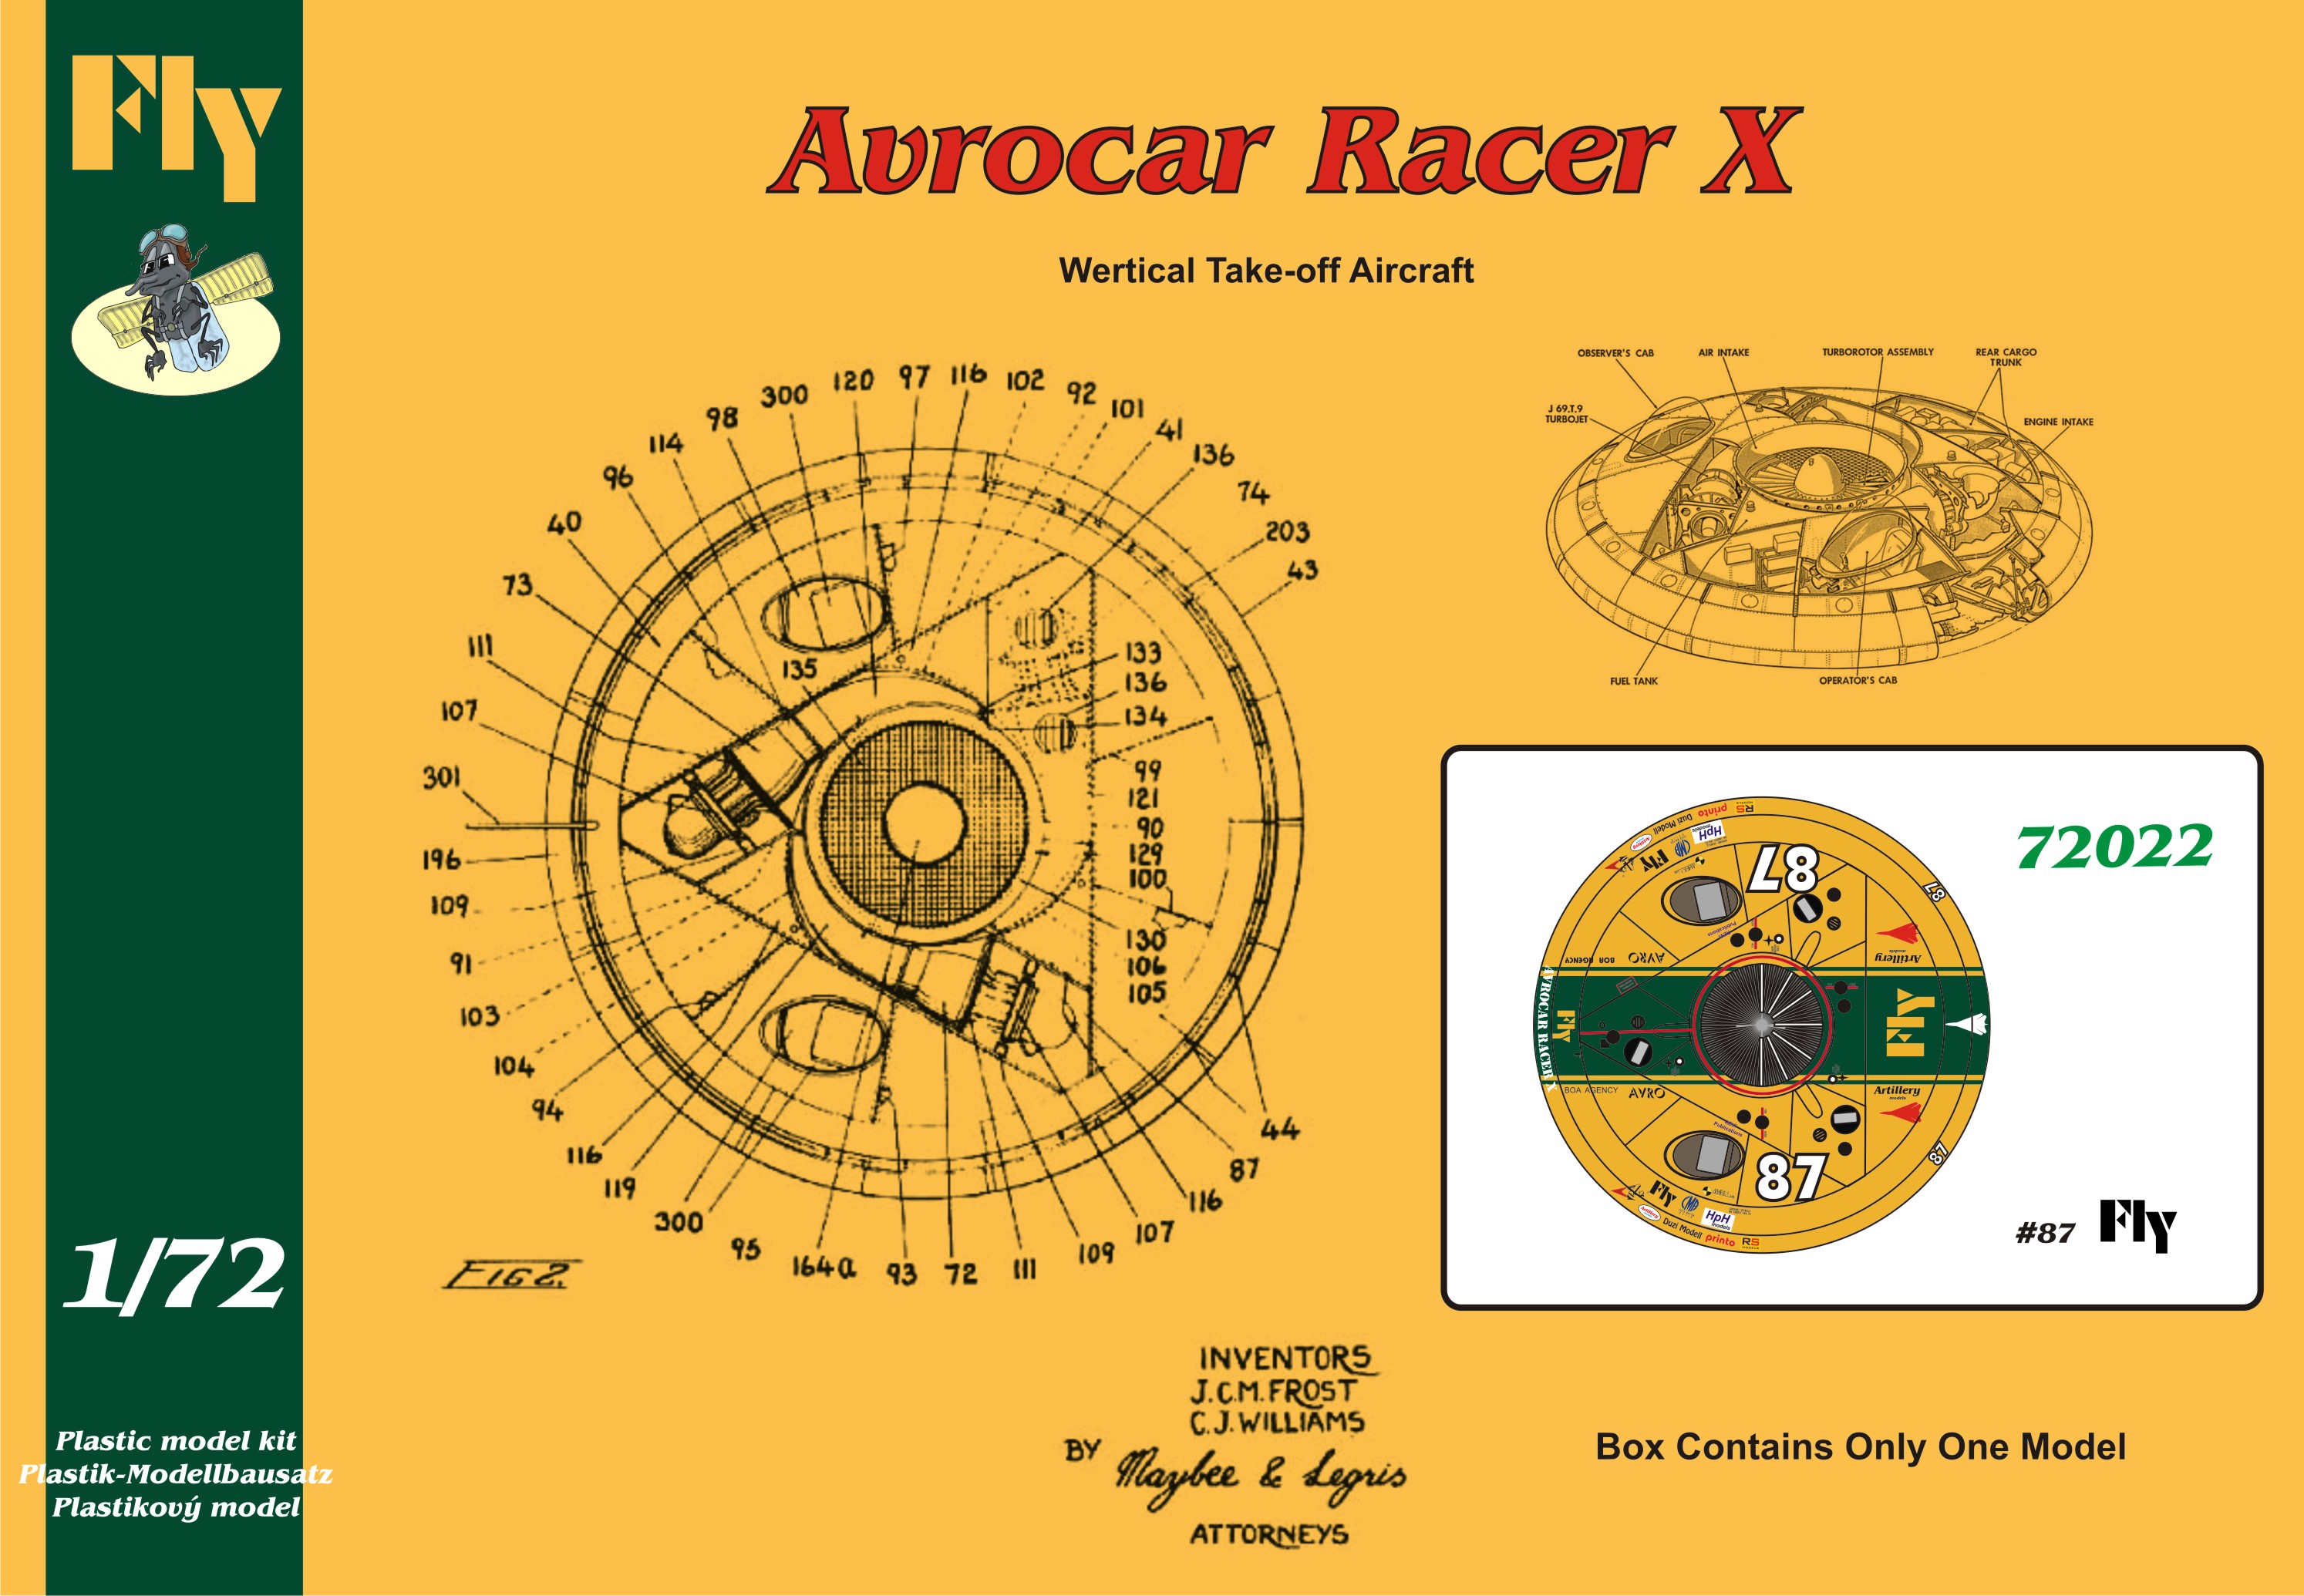 Avrocar Racer X Fly